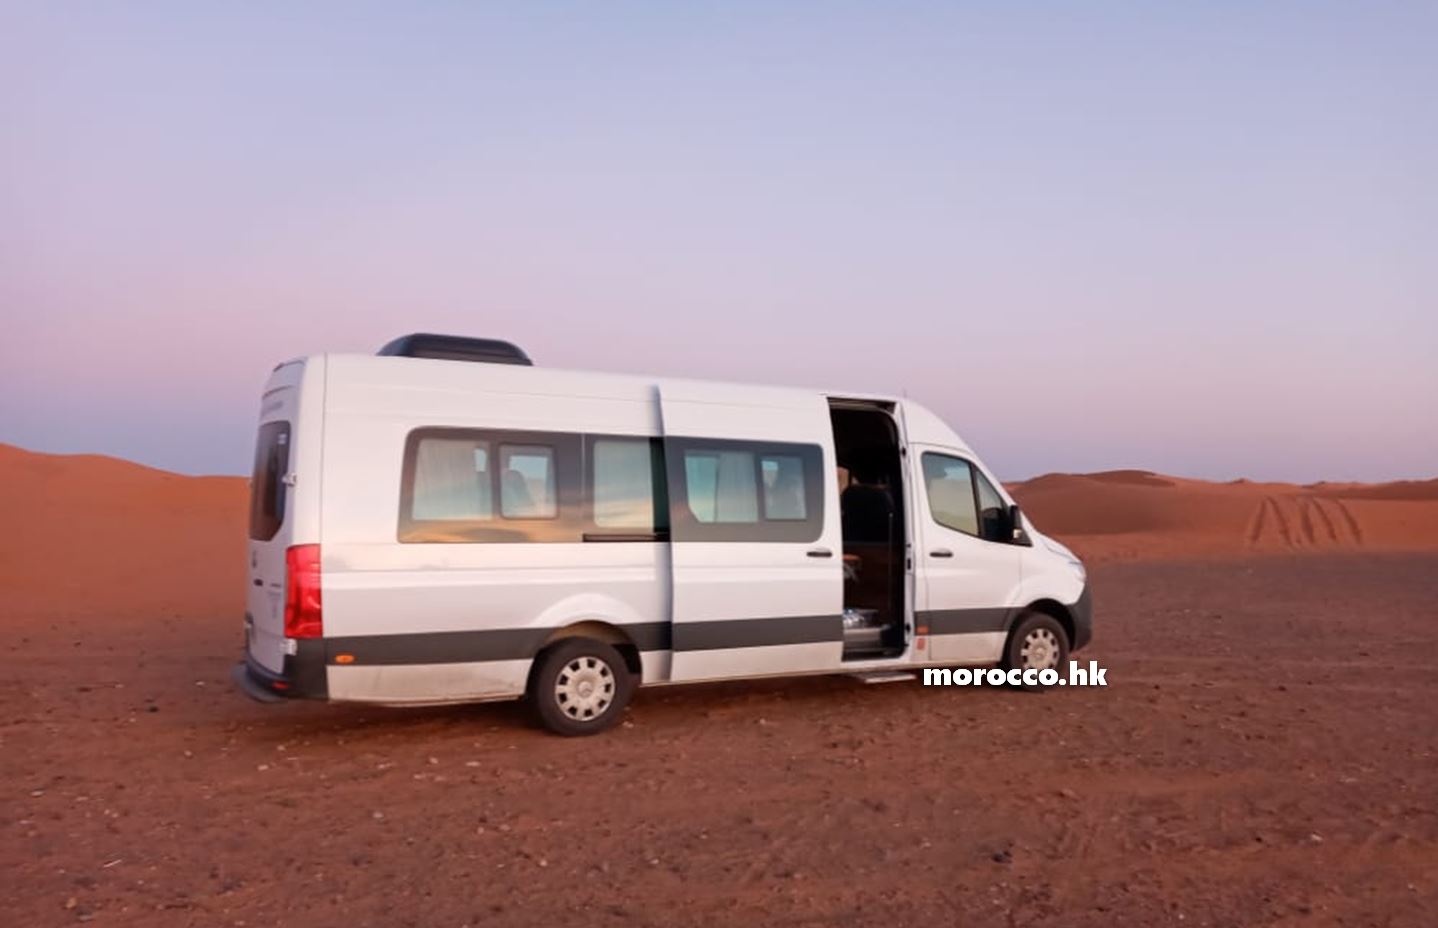 moroccohk_minibus